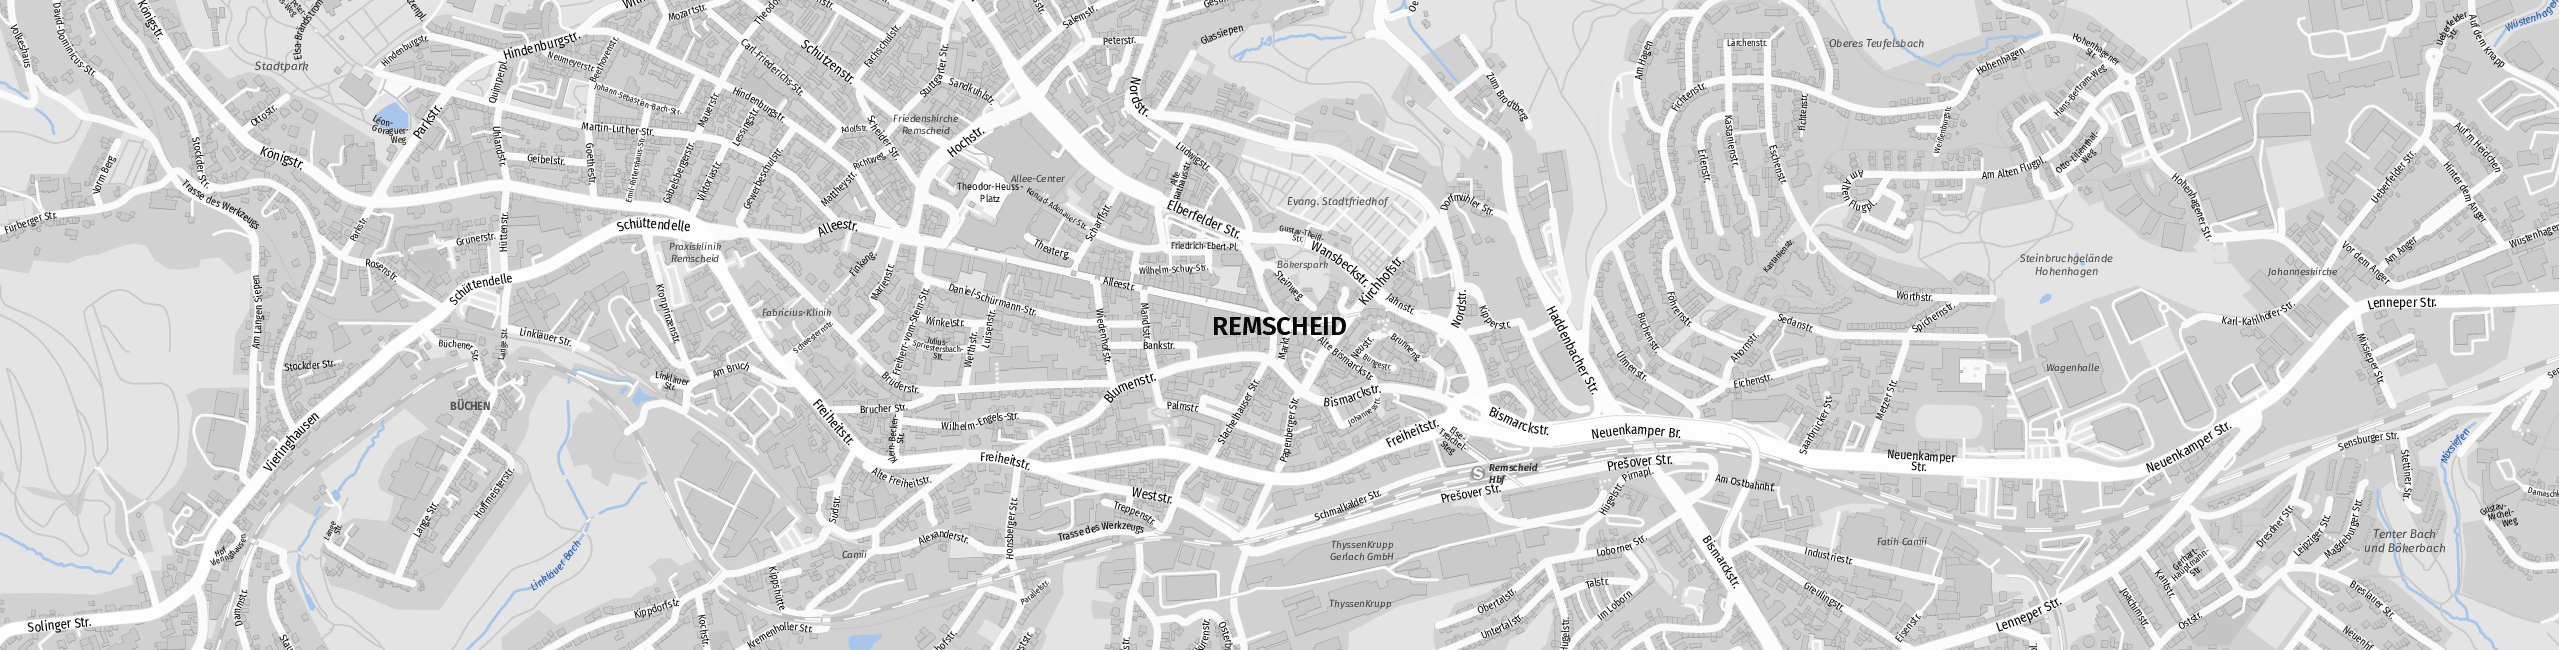 Stadtplan Remscheid zum Downloaden.